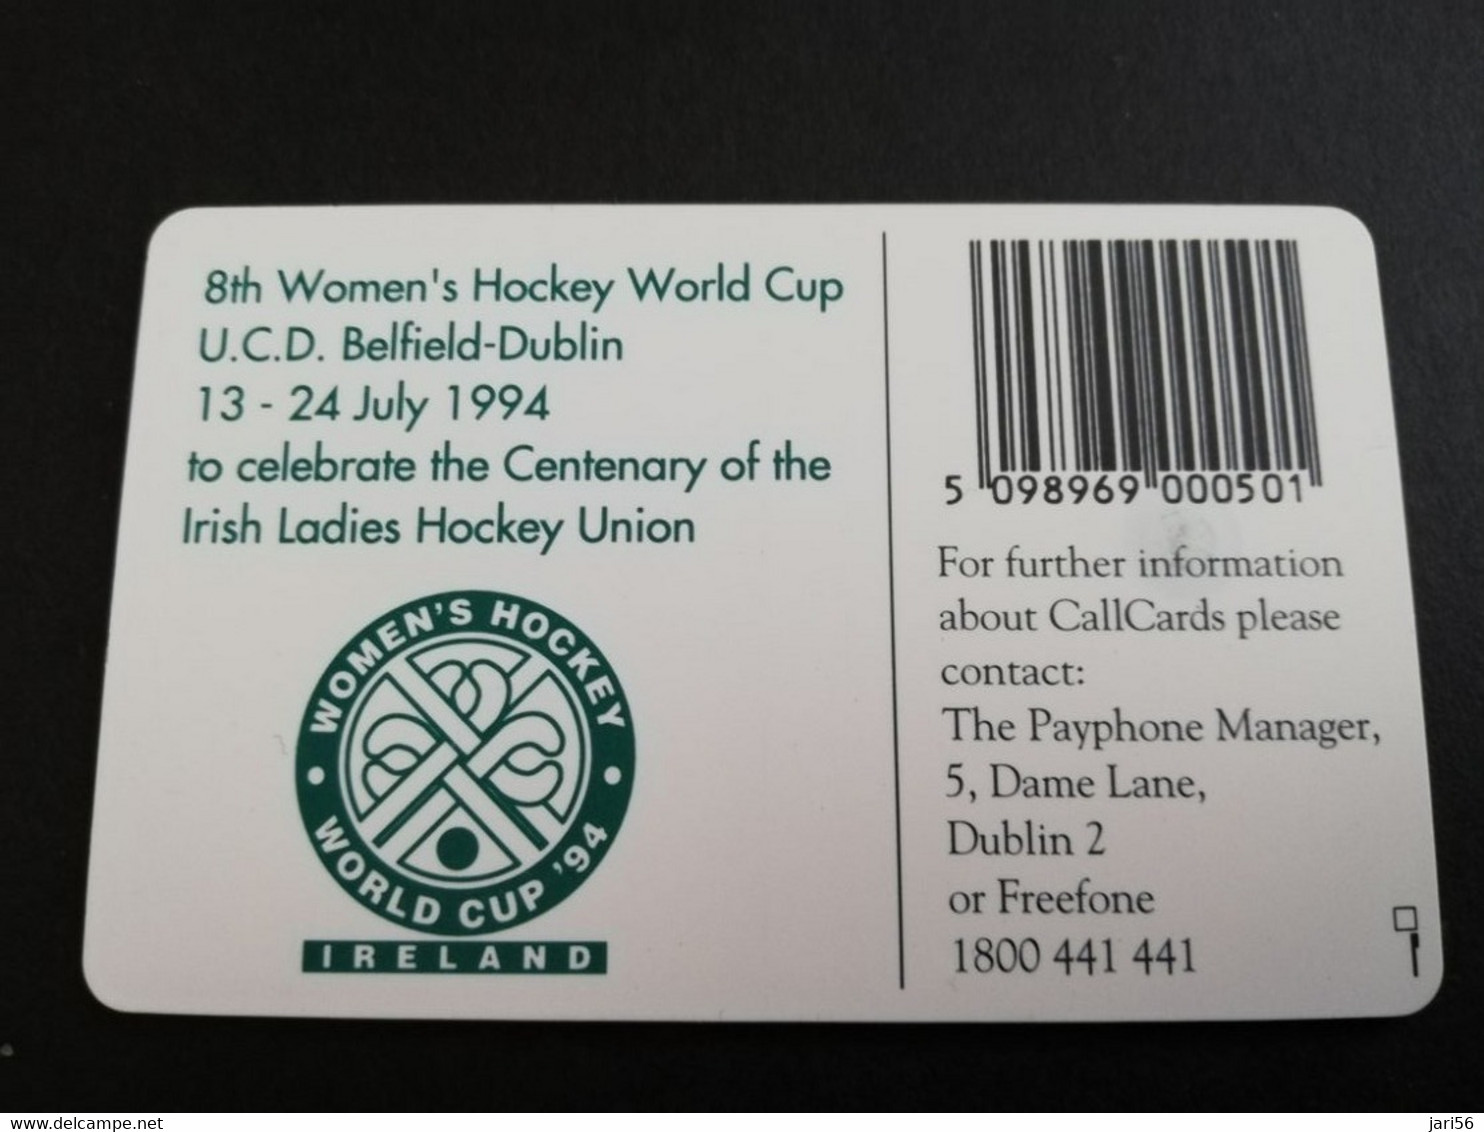 IRELAND /IERLANDE   CHIPCARD  50  UNITS  8TH WOMENS HOCKEY WORLD CUP IRELAND           CHIP   ** 5267** - Irlande